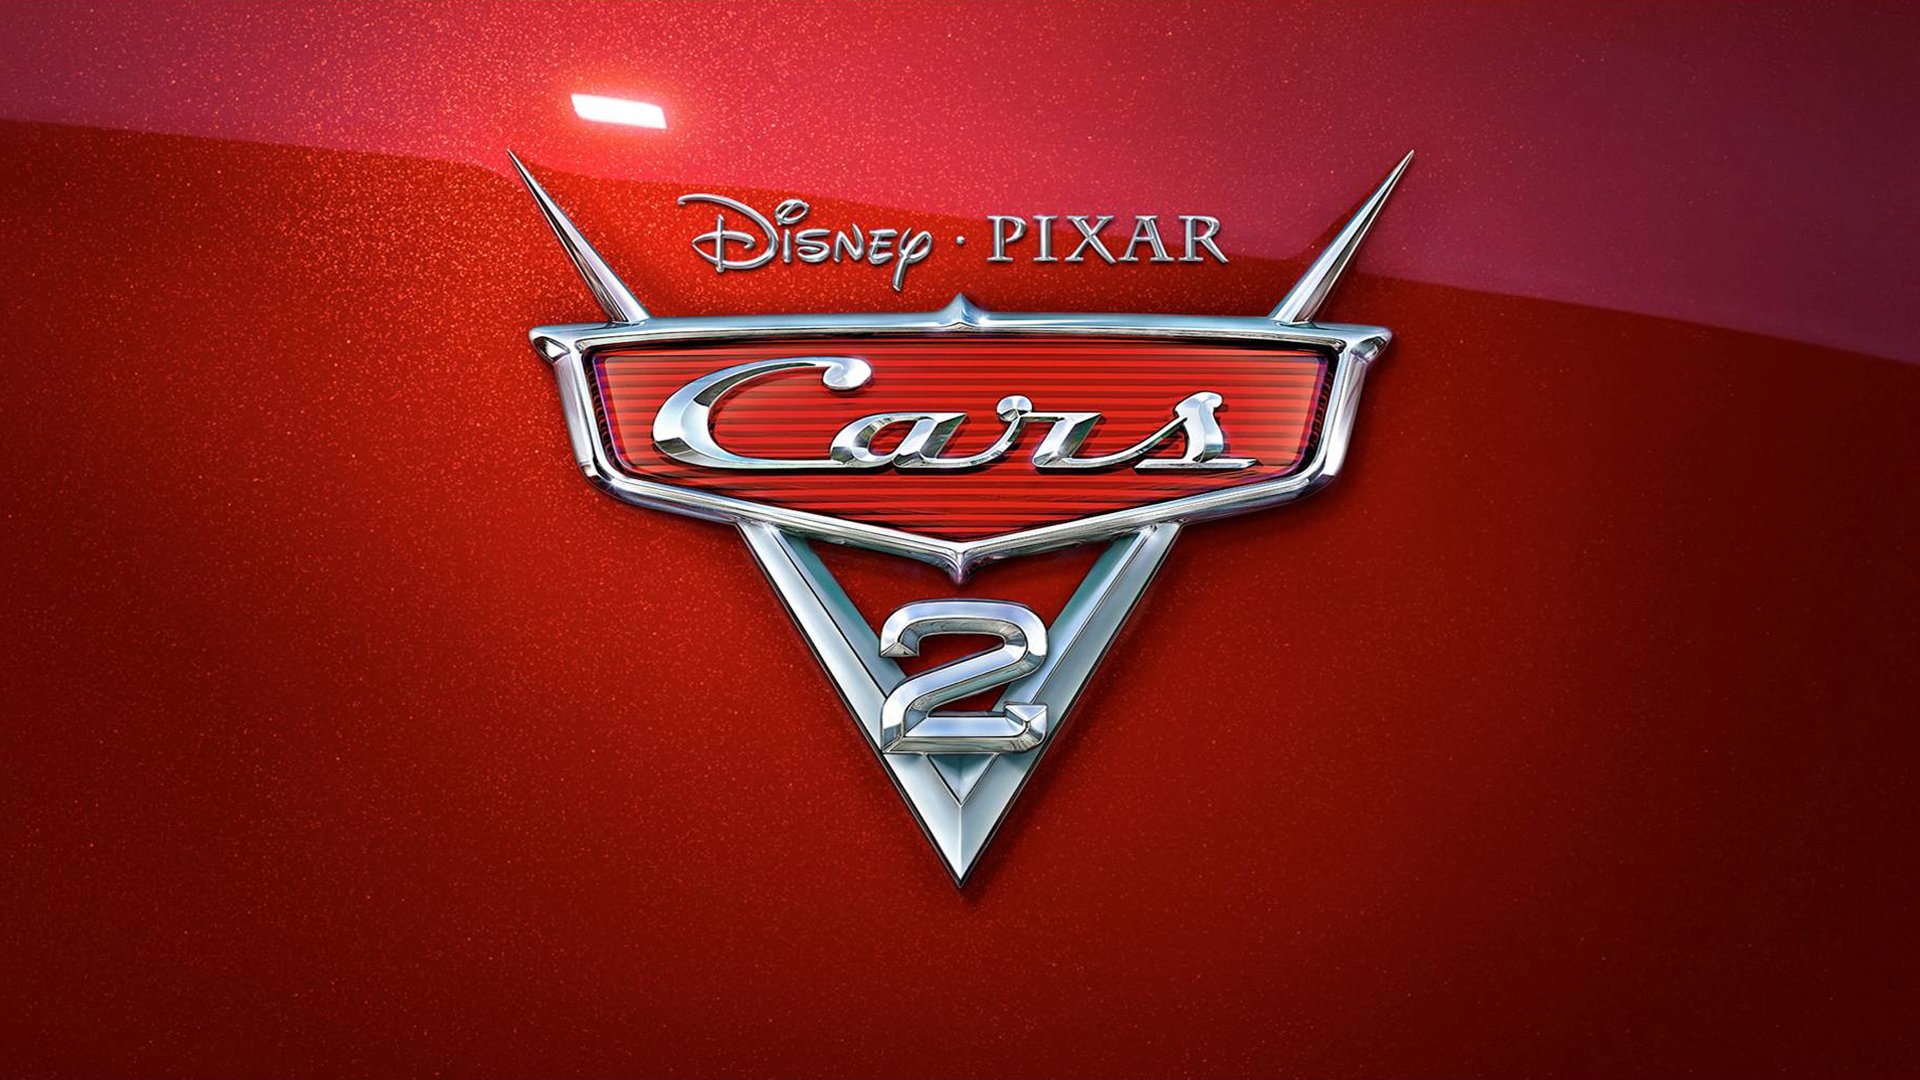 Disney Pixar Cars 2 2011 Wallpapers HD Wallpapers 1920x1080